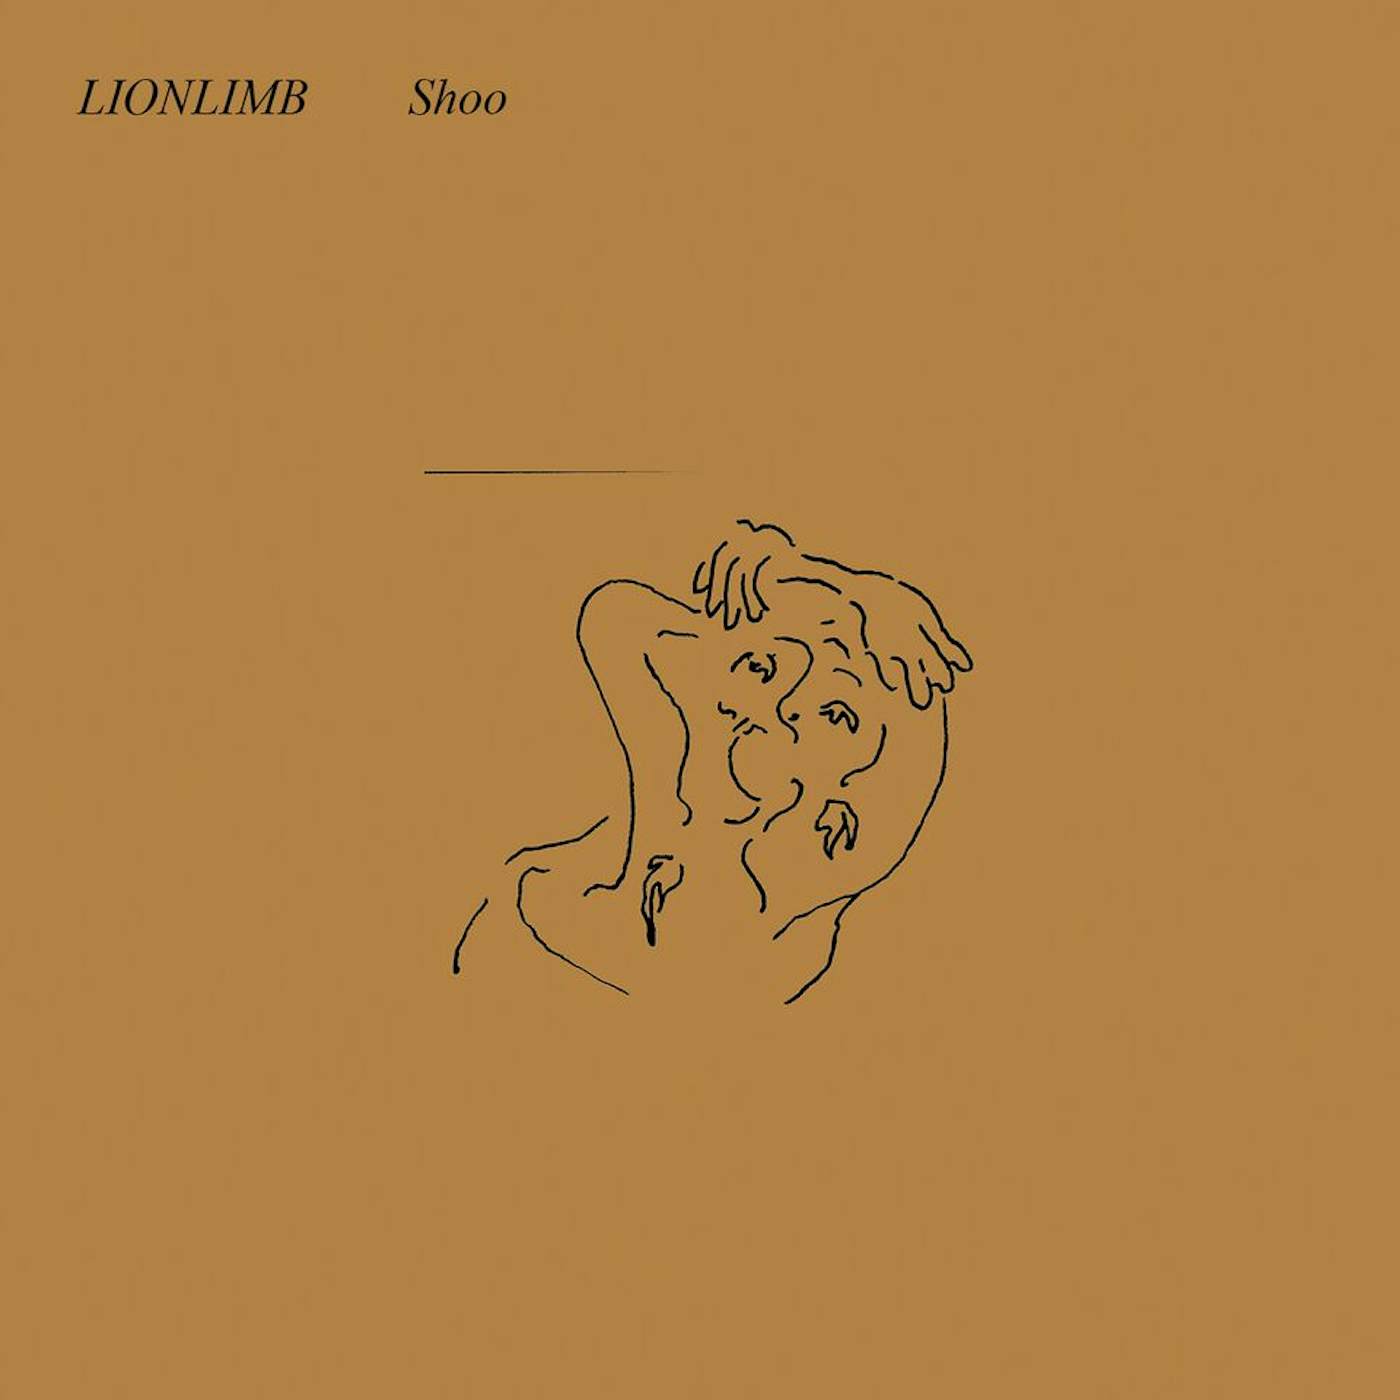 Lionlimb SHOO CD